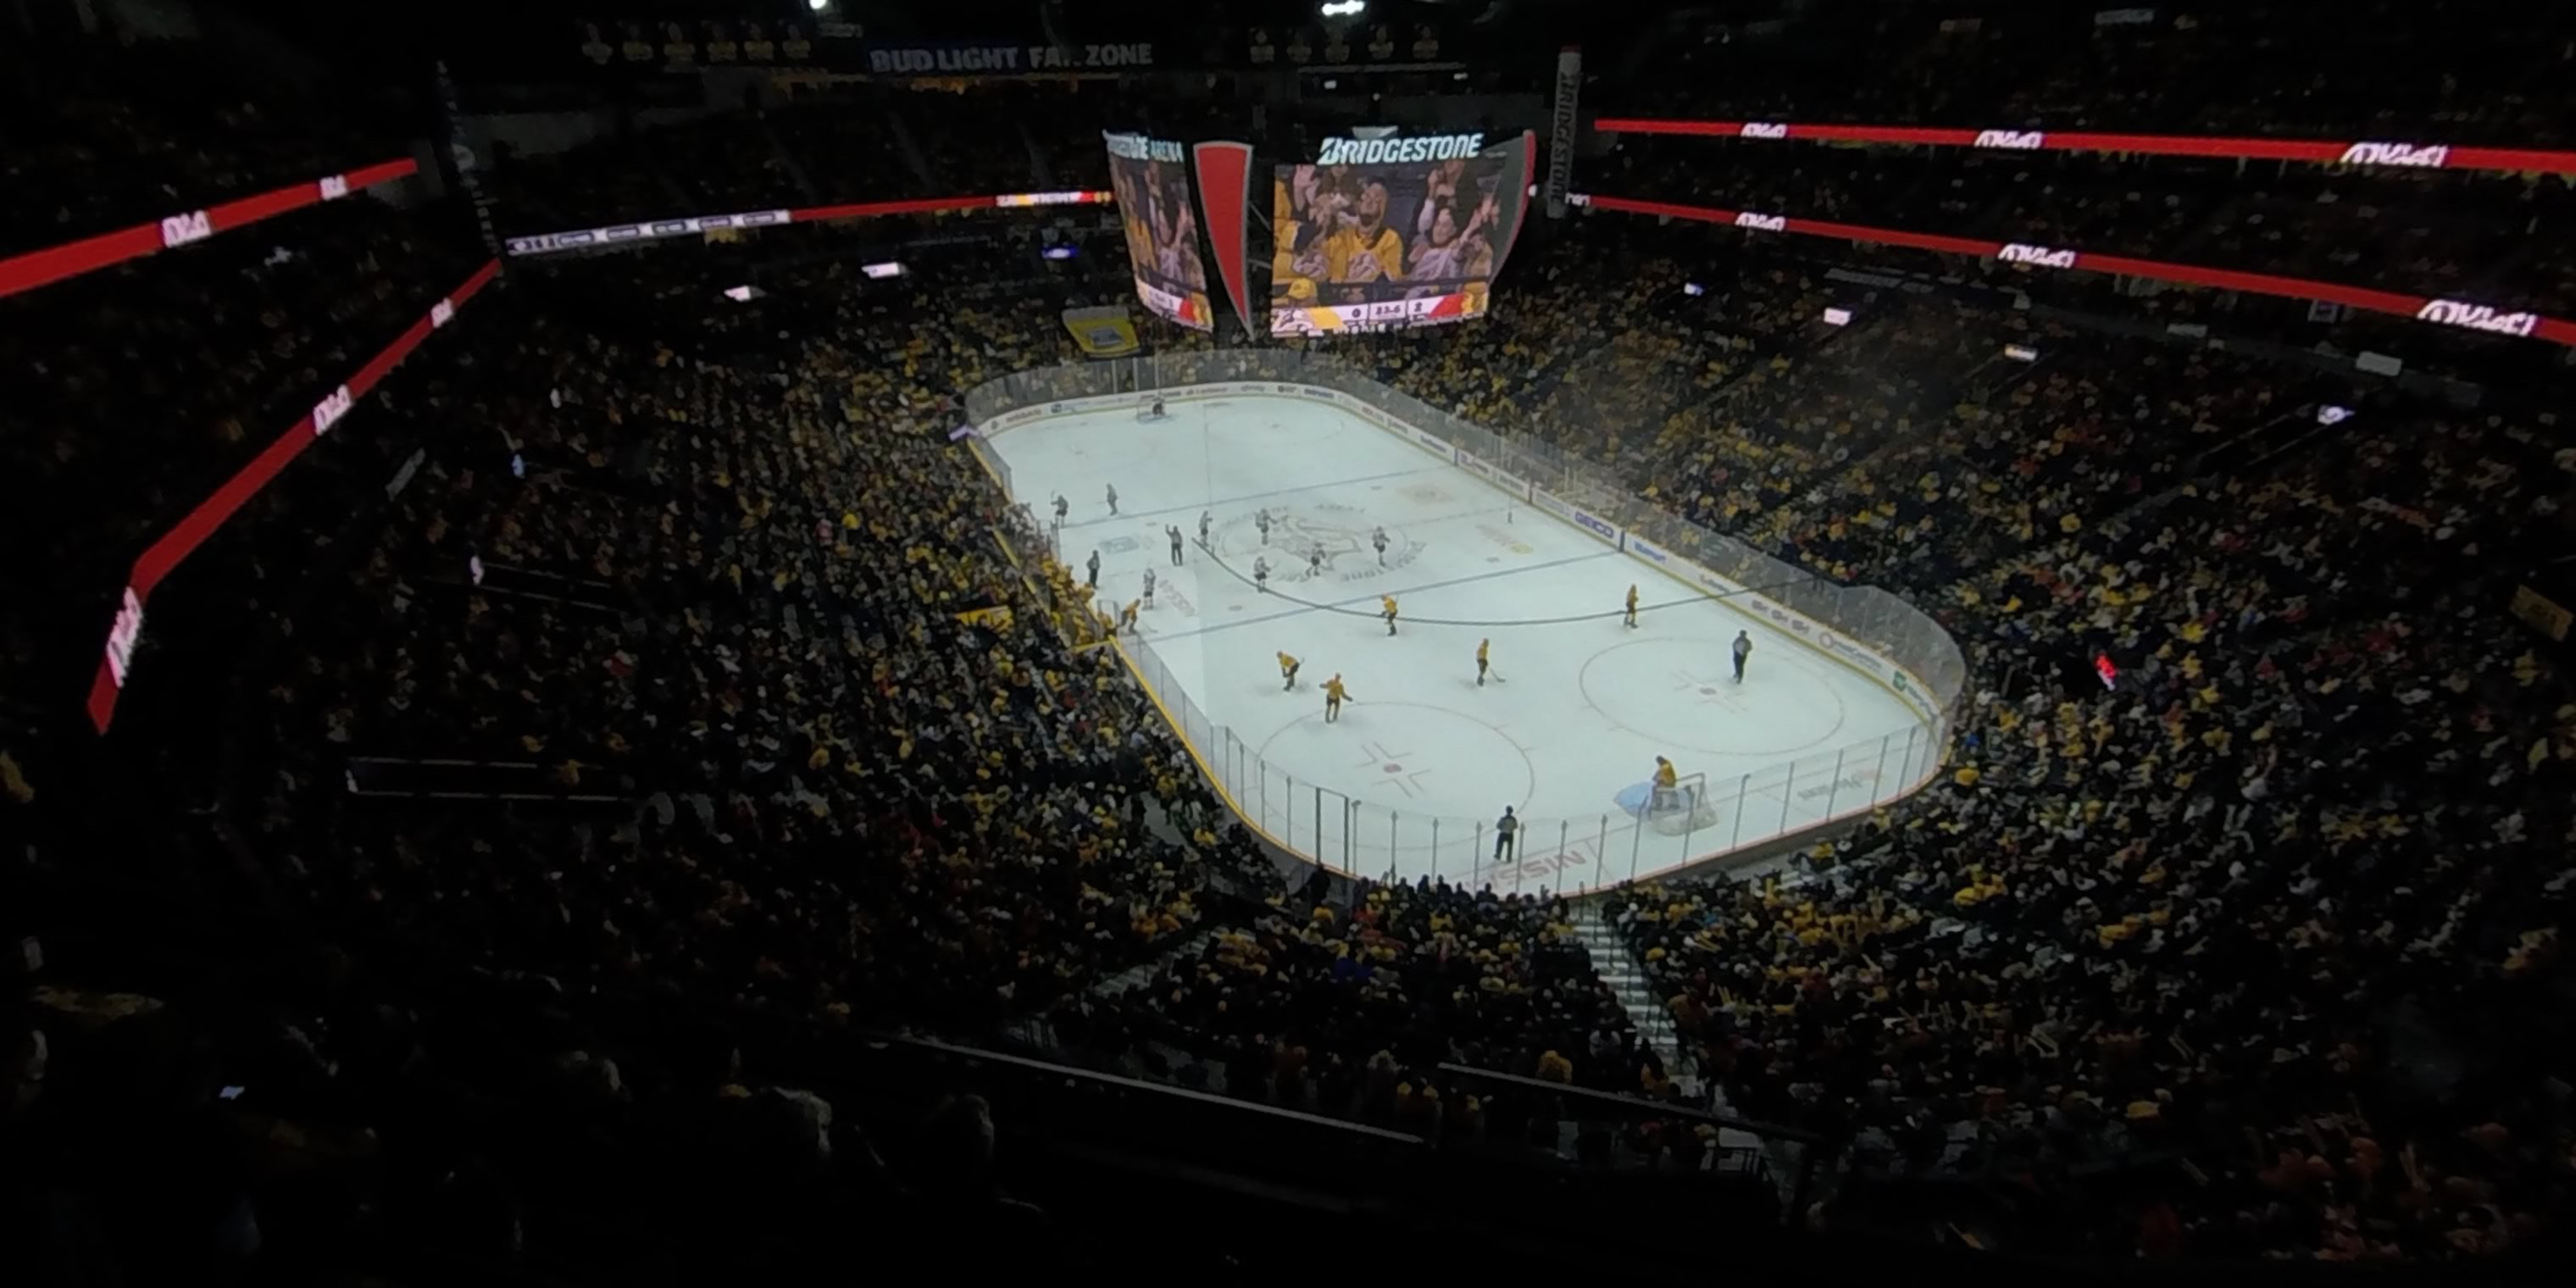 section 331 panoramic seat view  for hockey - bridgestone arena